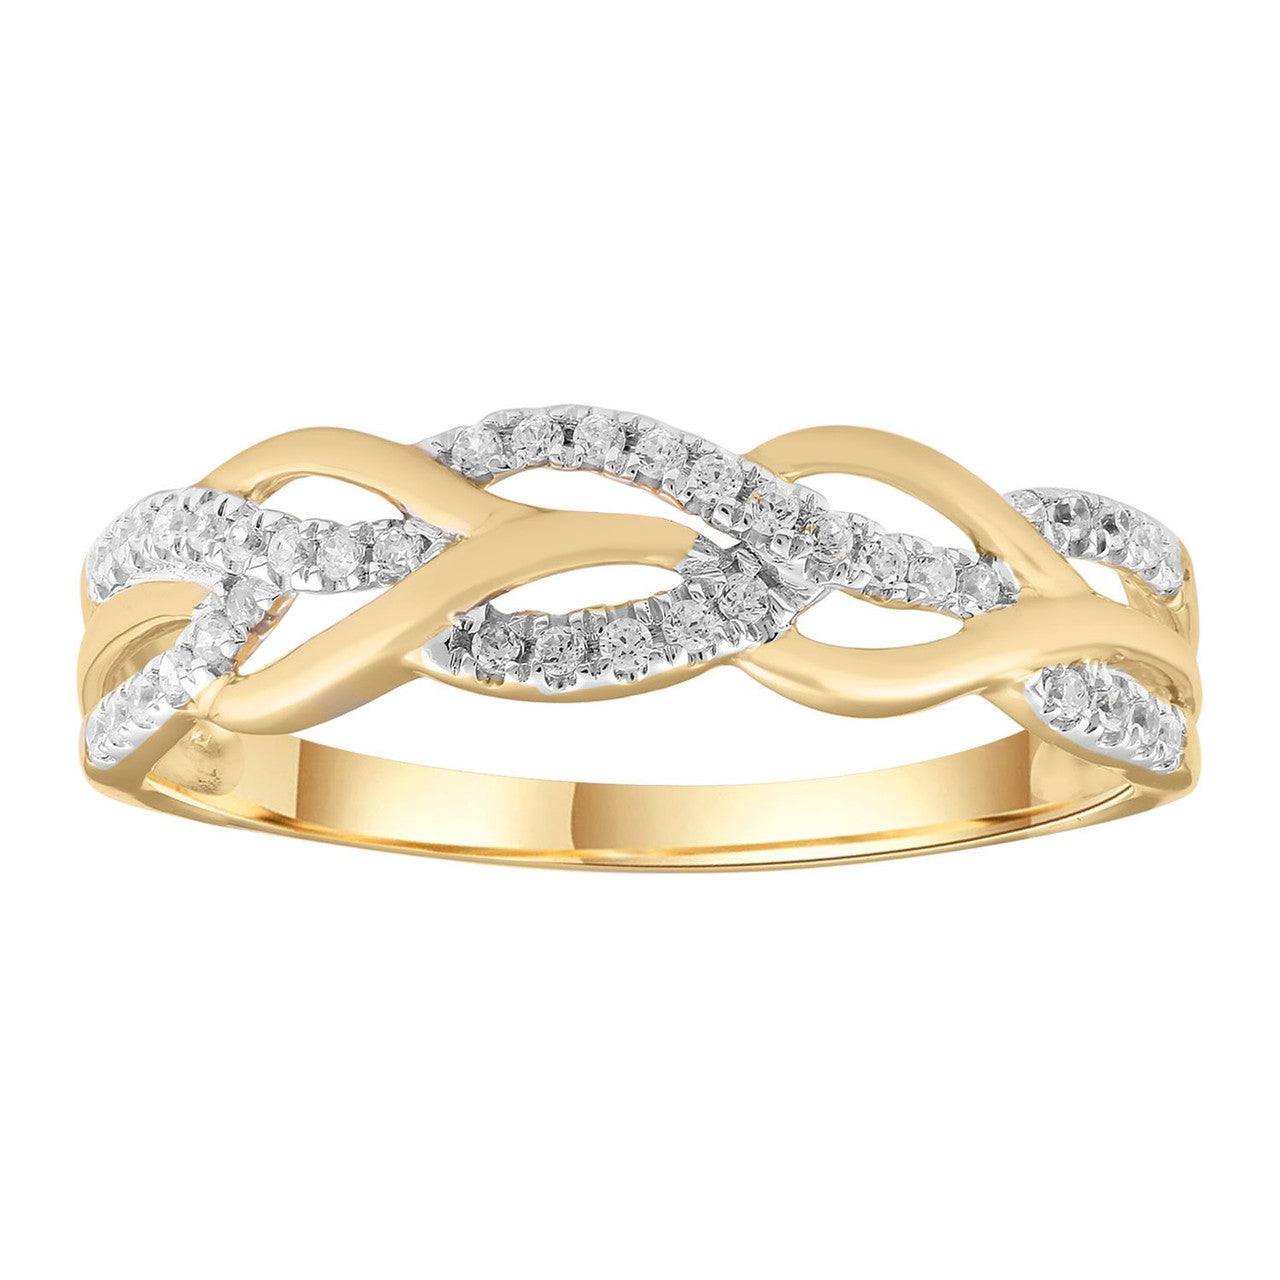 Ice Jewellery Ring with 0.15ct Diamond in 9K Yellow Gold -  R-41459-015-Y | Ice Jewellery Australia